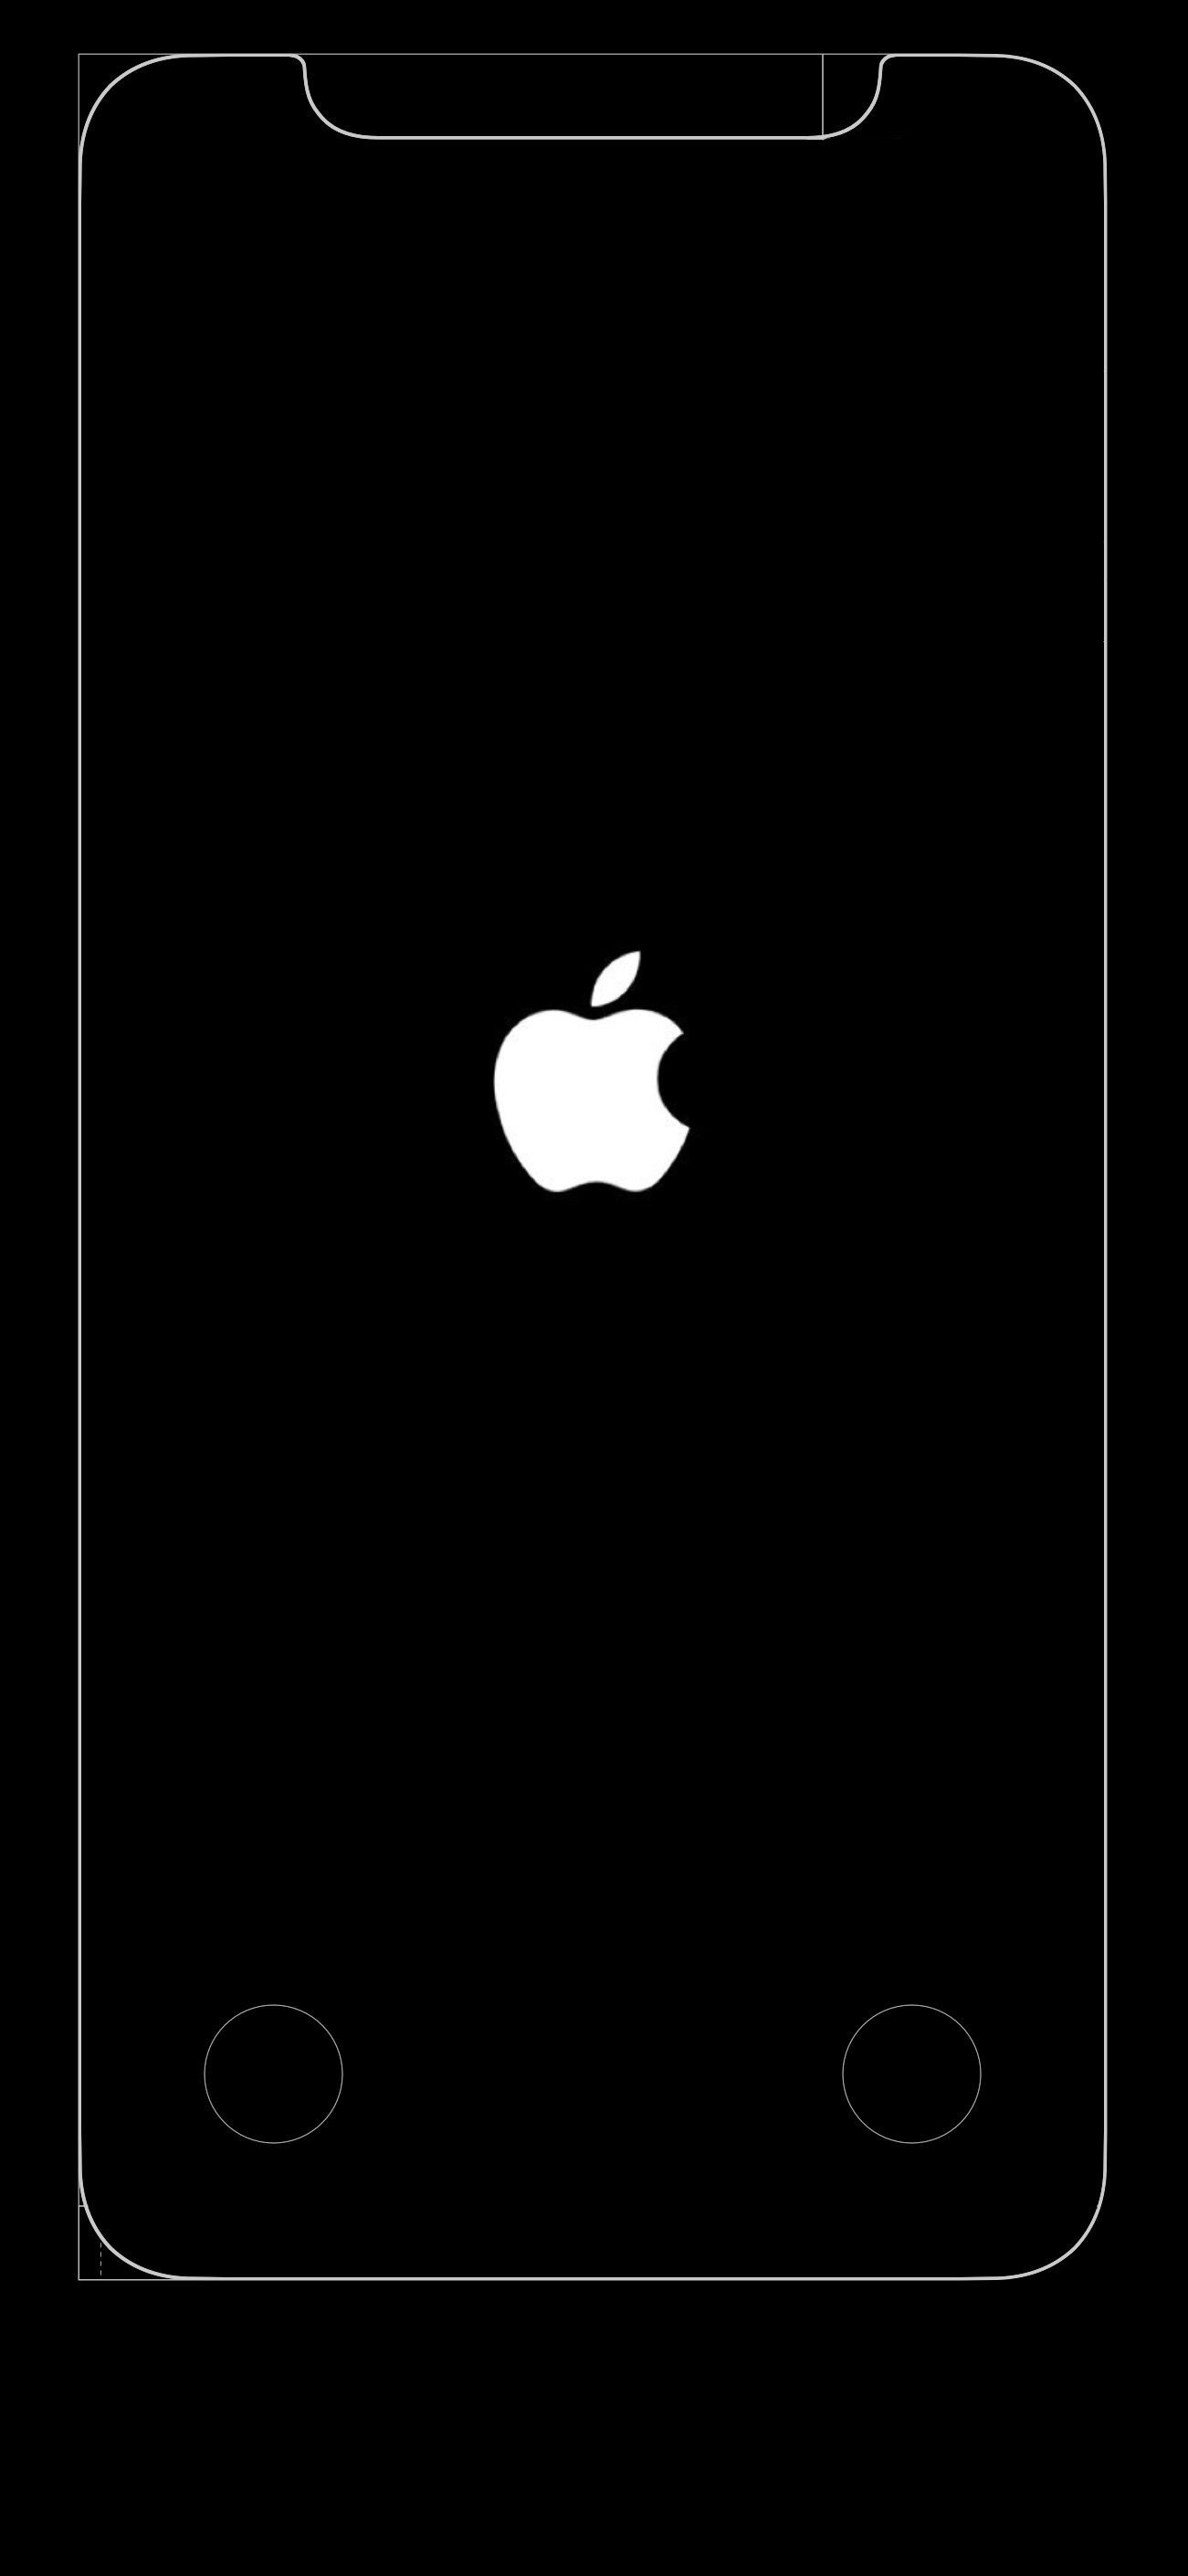 iPhone. Apple logo wallpaper iphone, Apple